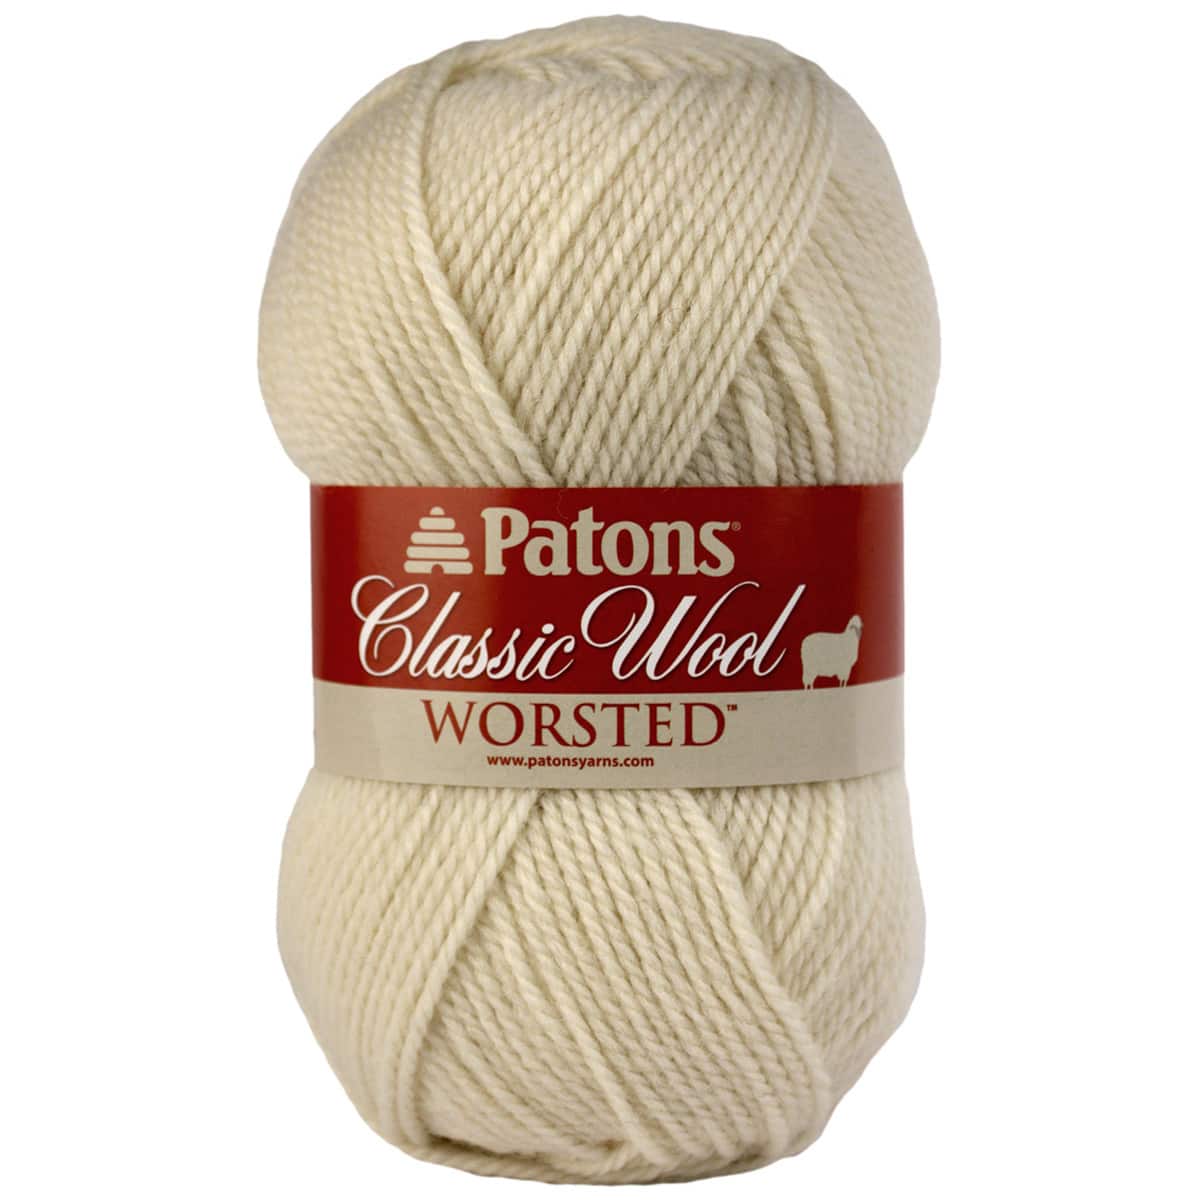  Patons Classic Wool, Grey Yarn, 1 Pack, Gray Mix